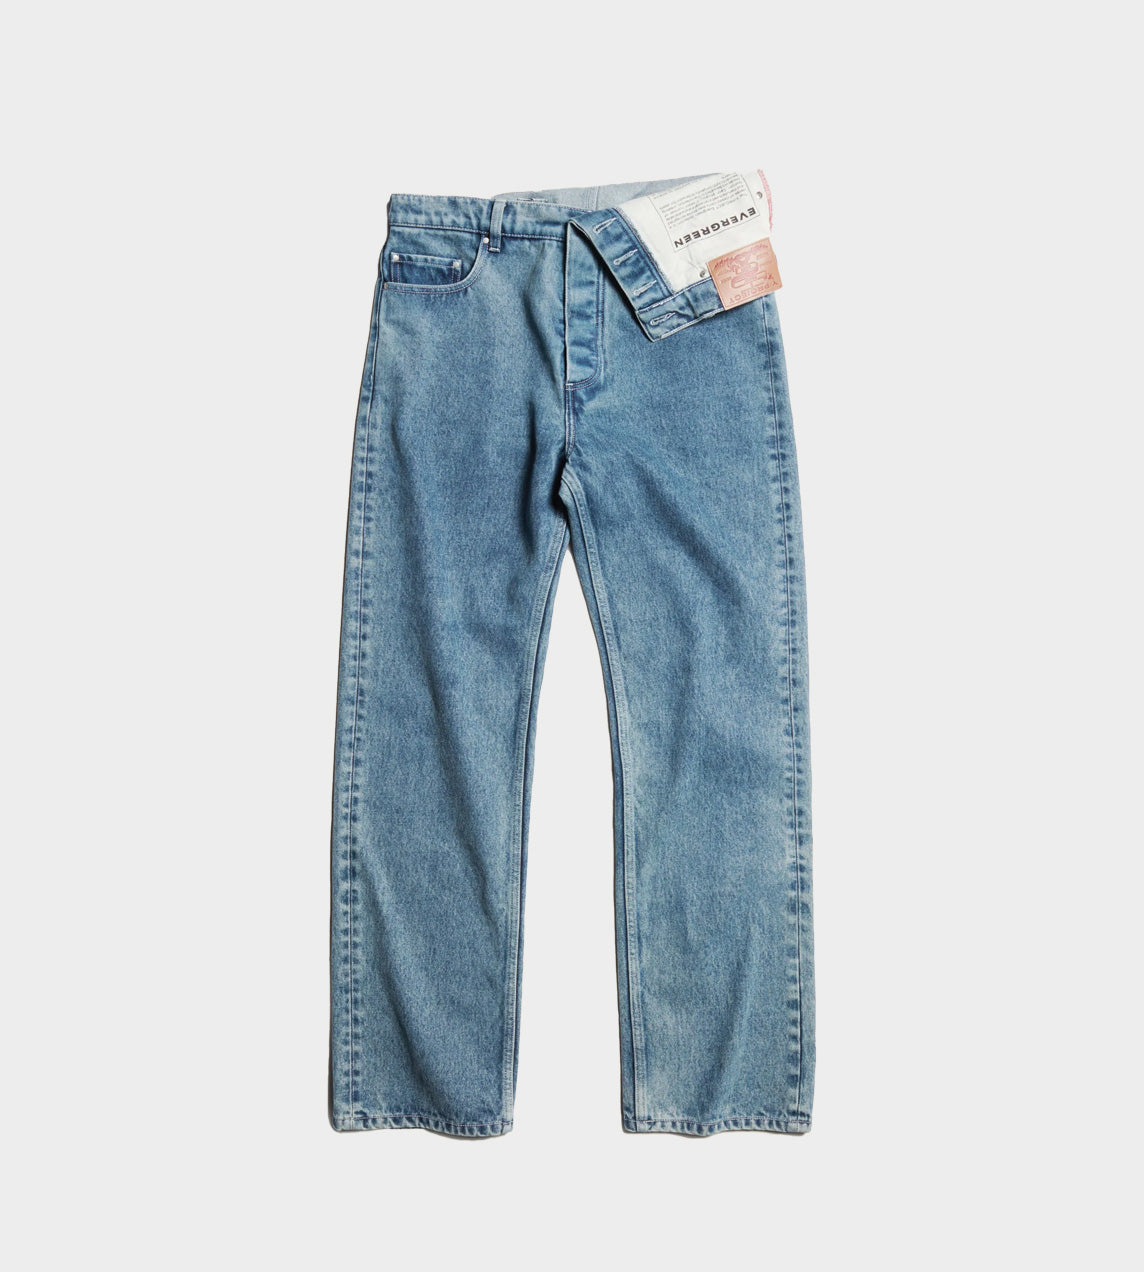 Y/Project - Classic Asymmetric Waist Jeans Navy – WDLT117